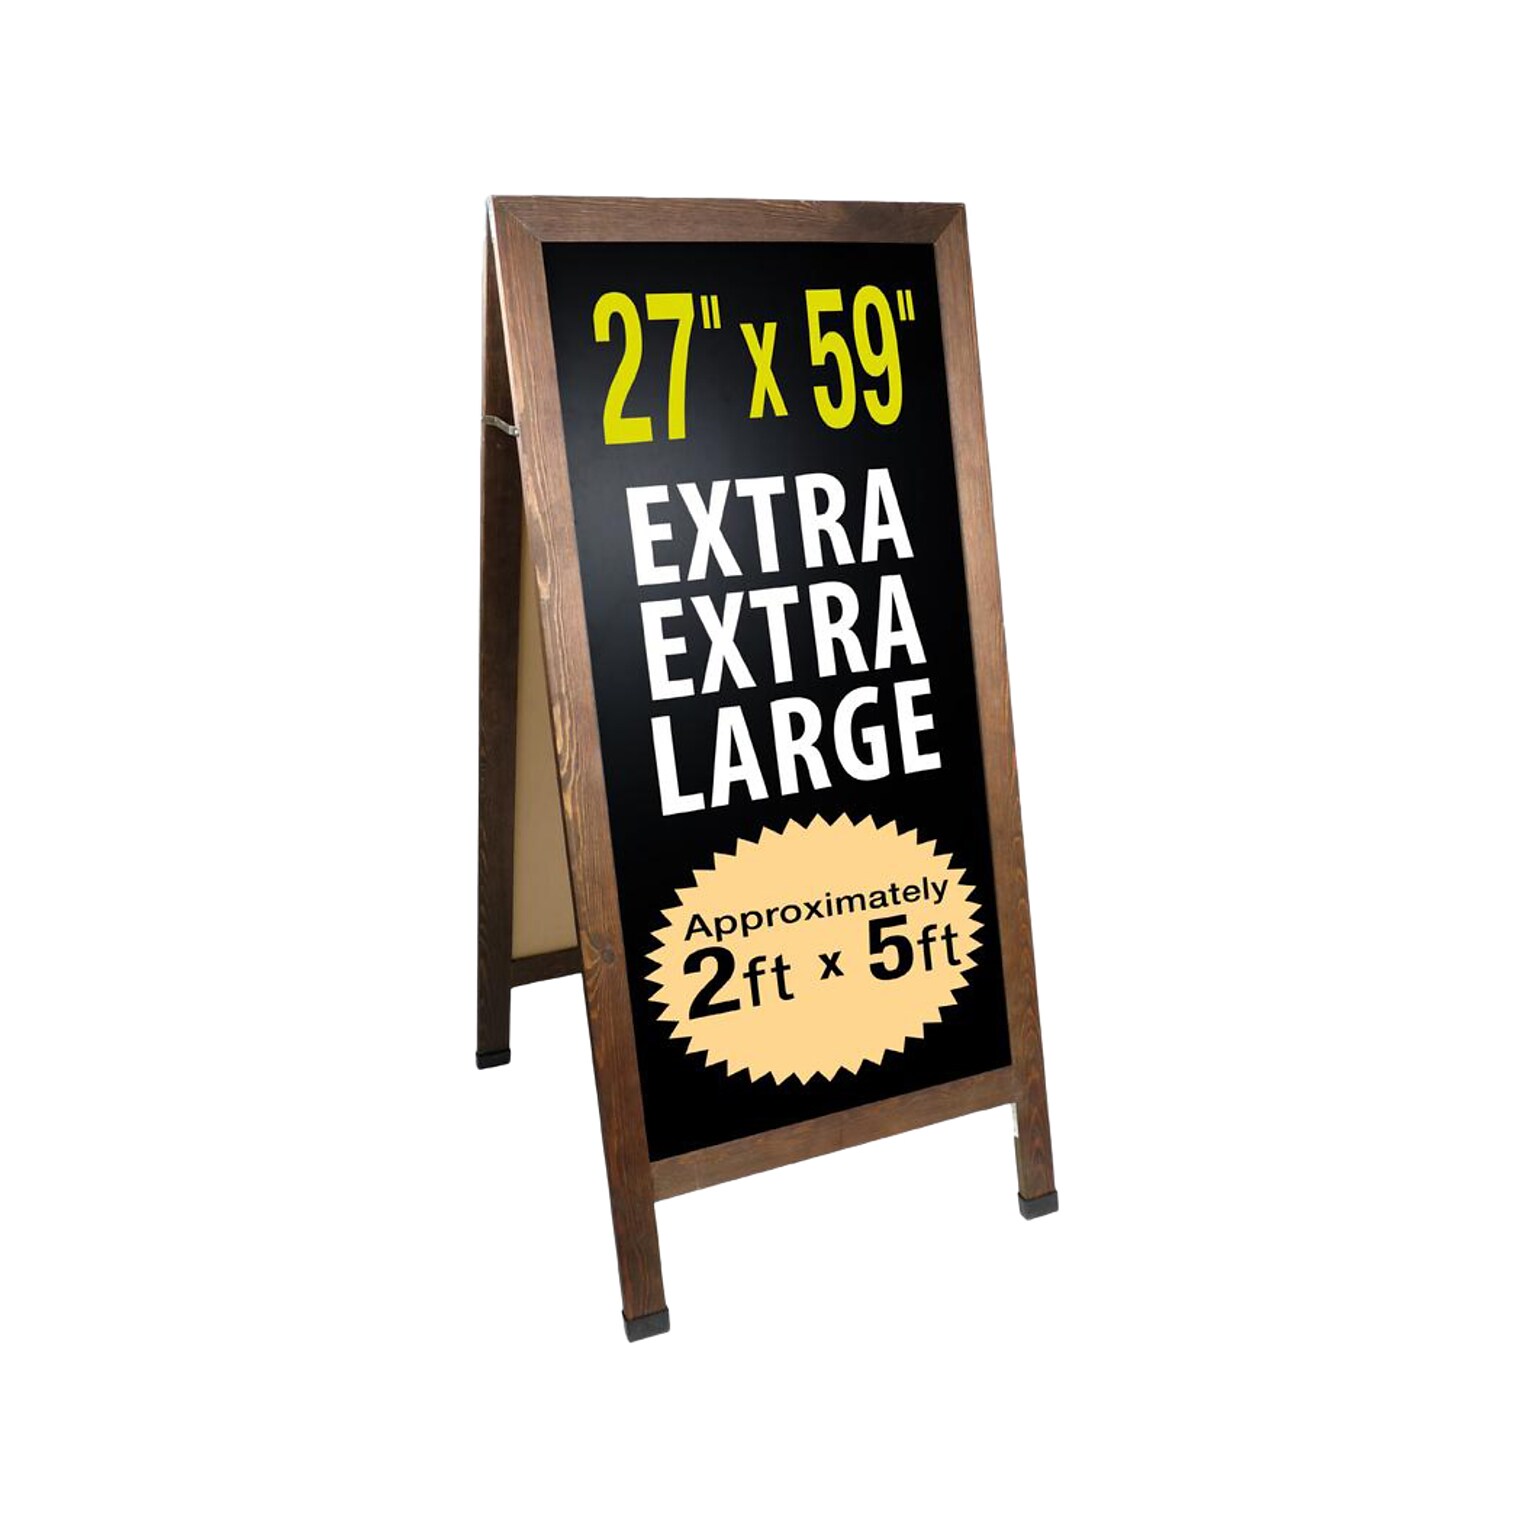 Excello Global Products Gigantic Sandwich Board Sidewalk Chalkboard Sign, Wood, 59 x 27 (EGP-HD-0240-OS)